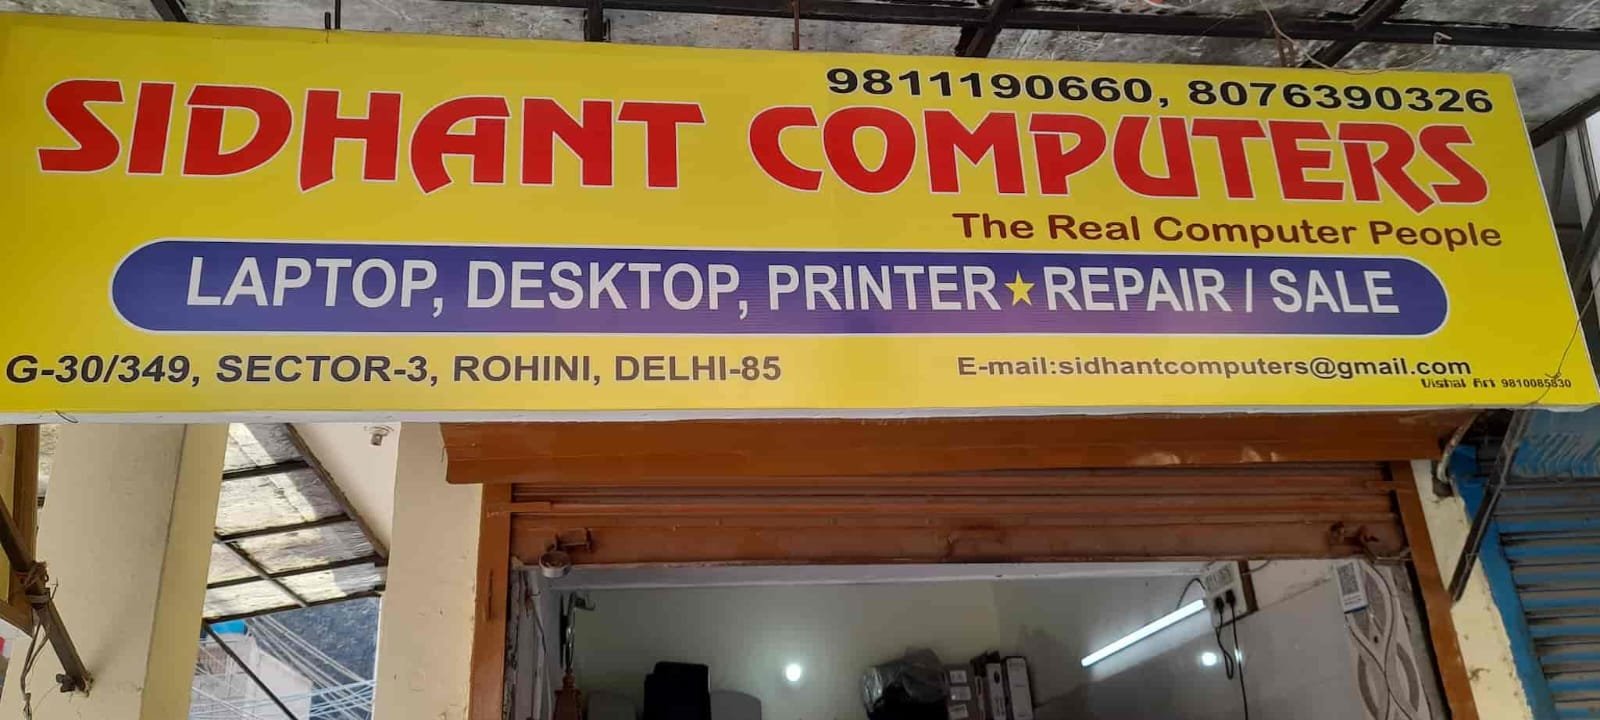 Sidhant Computers